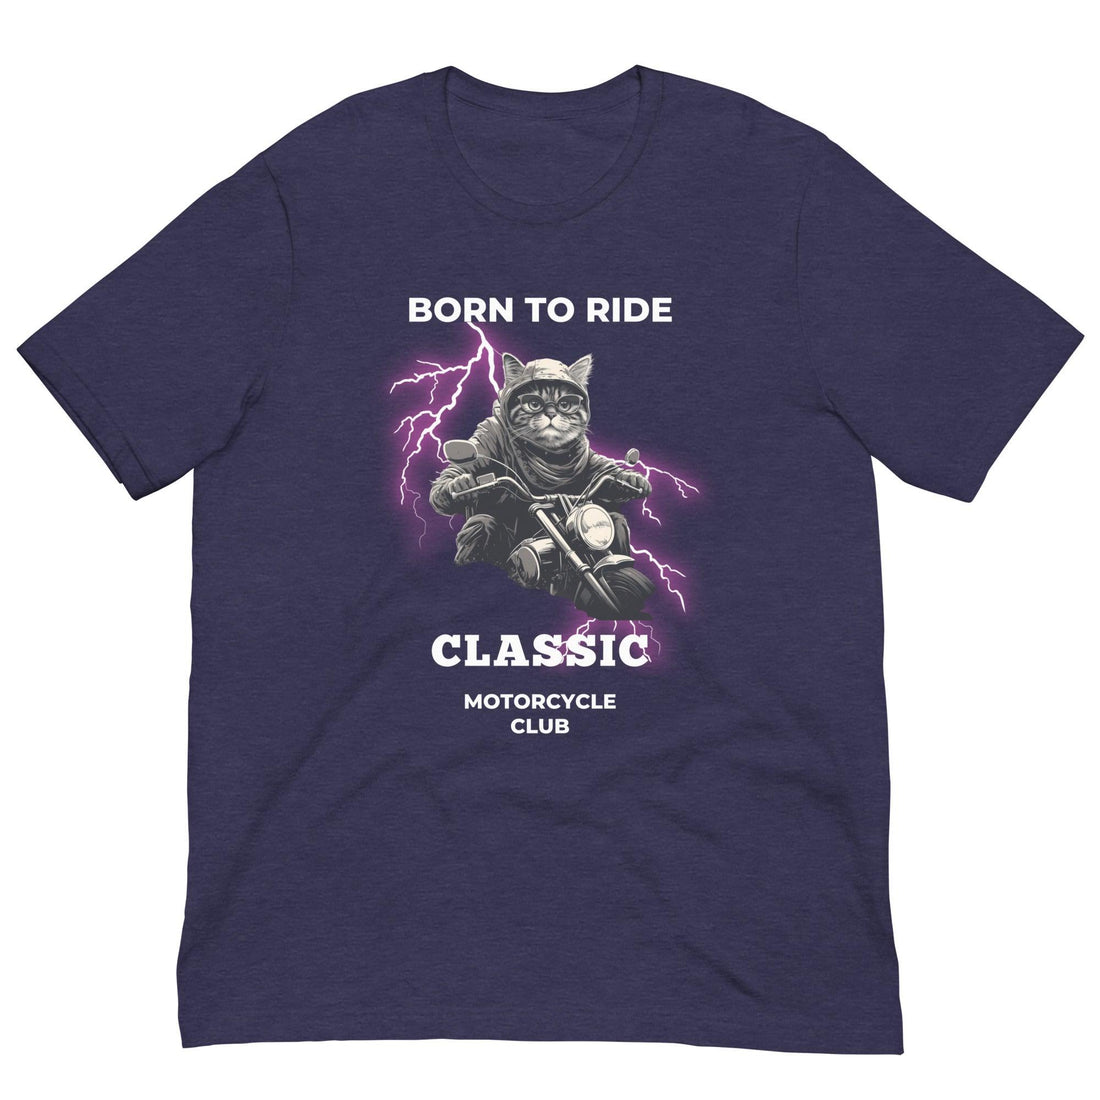 Born to Ride Cat Shirts - Cat Shirts USA